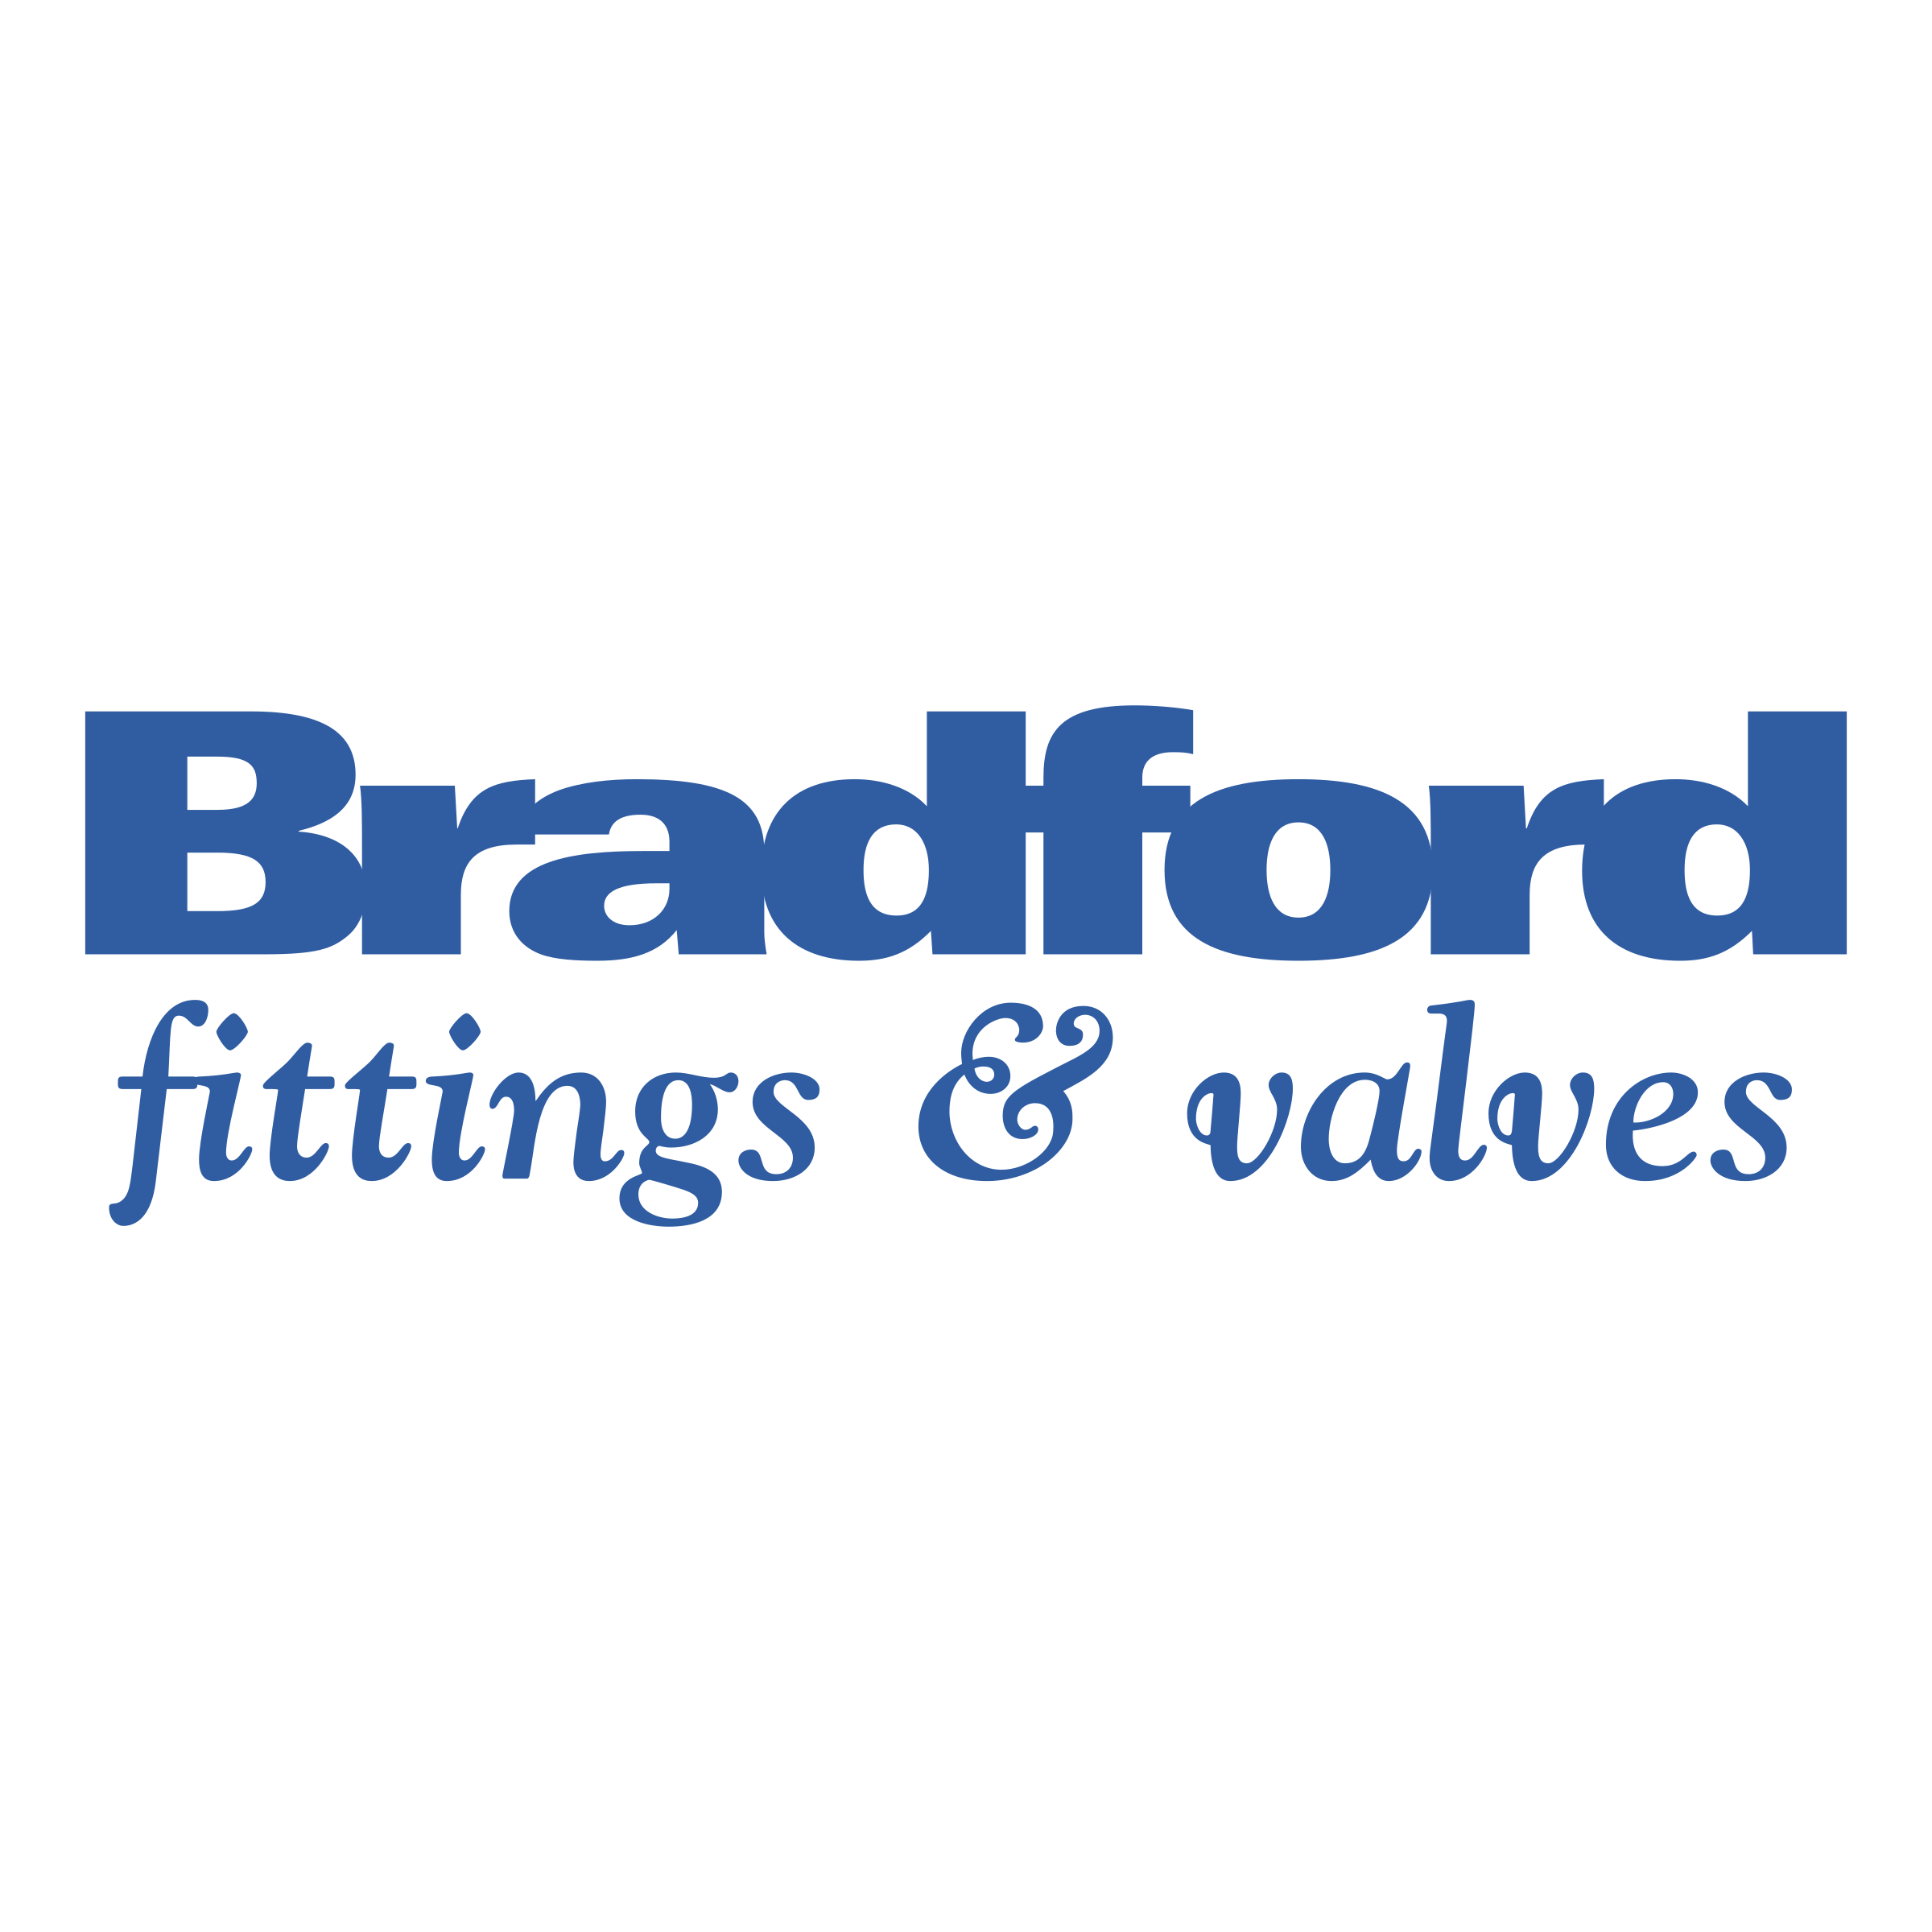 Bradford Logo - Bradford Logo PNG Transparent & SVG Vector - Freebie Supply